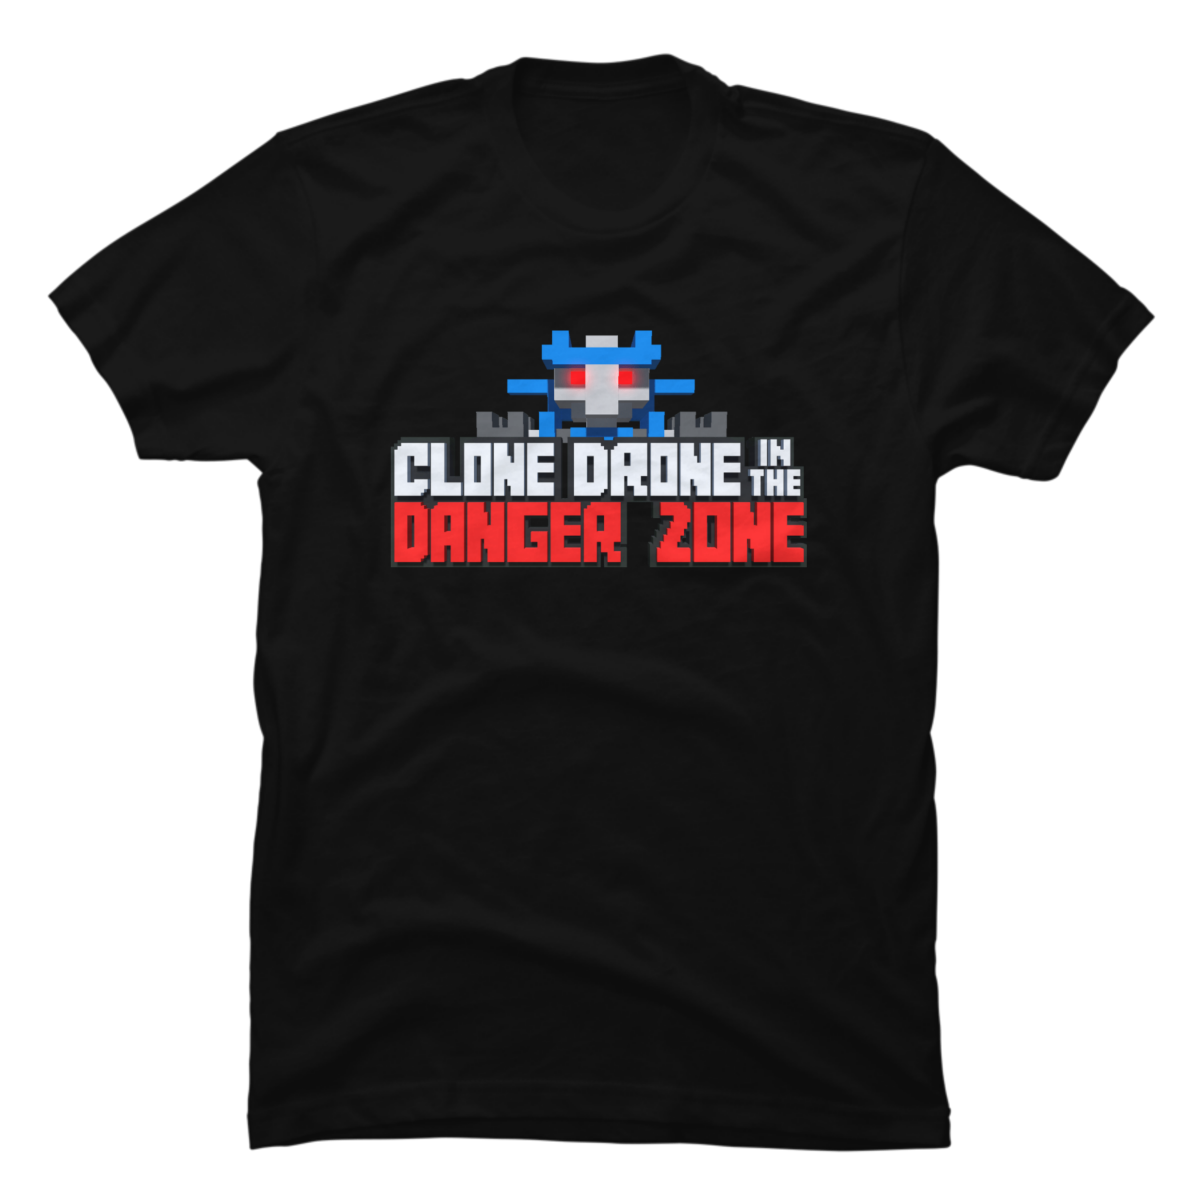 drone t-shirt design